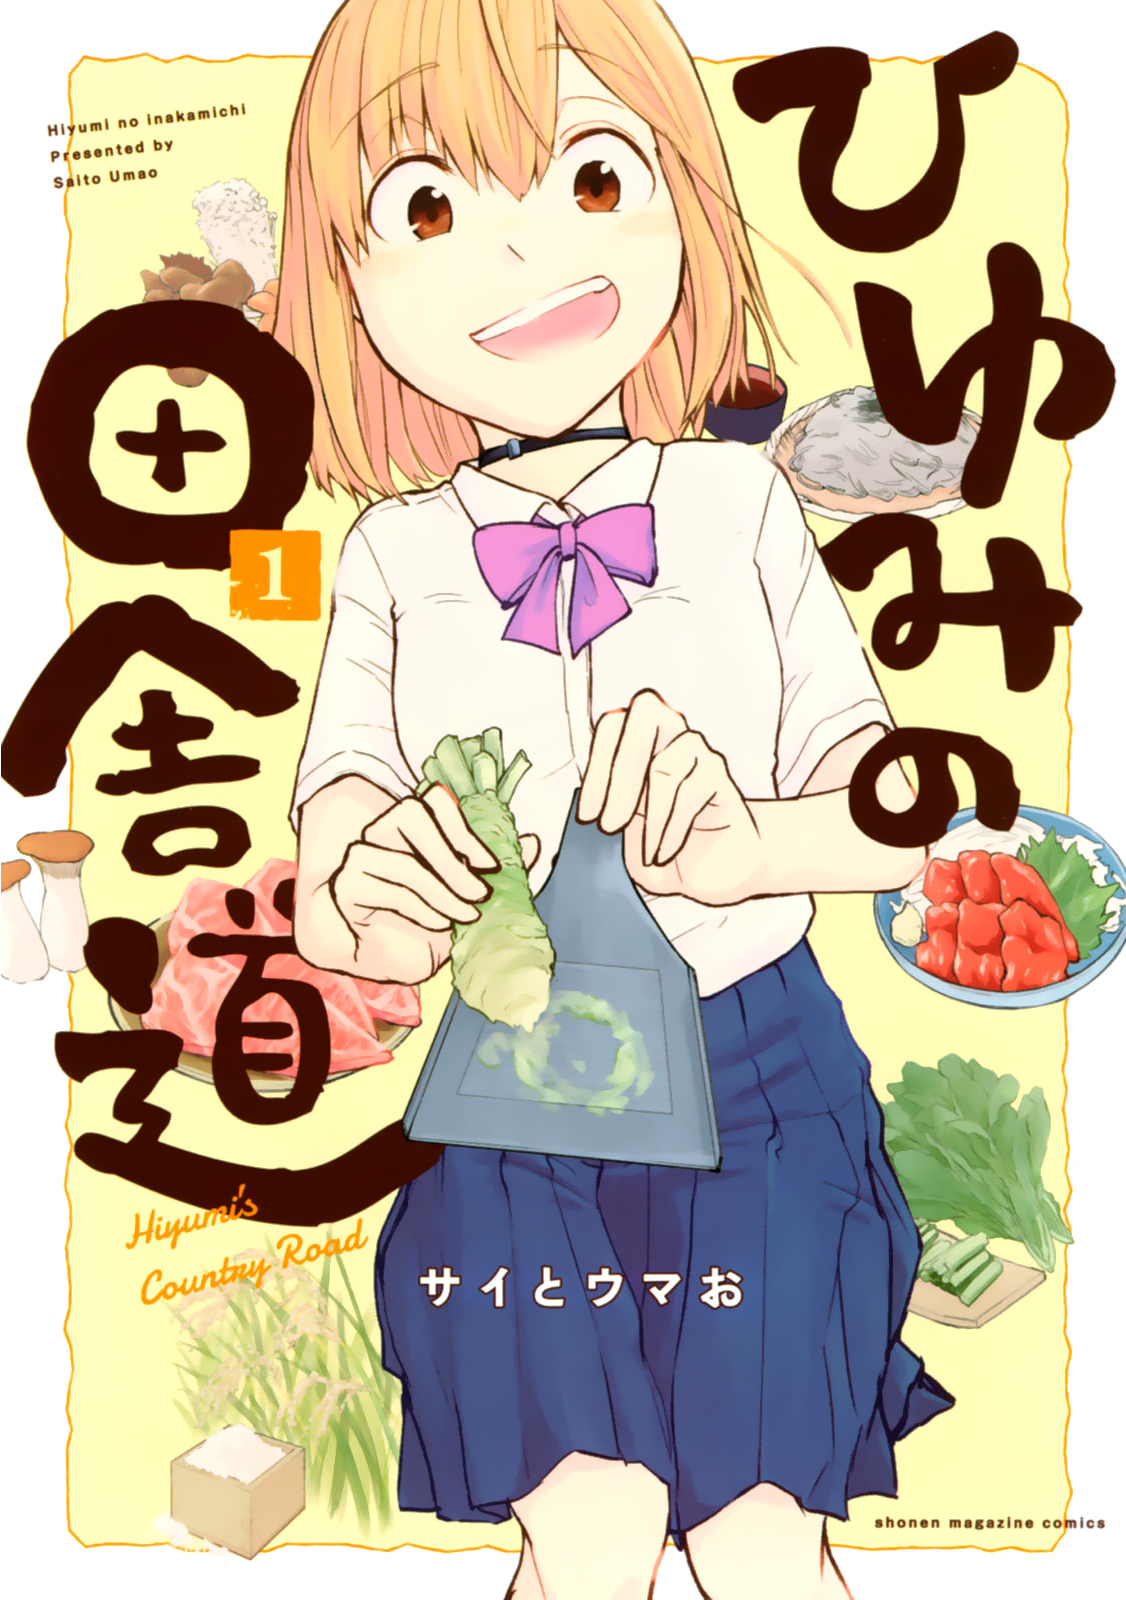 Hiyumi's Country Road Manga